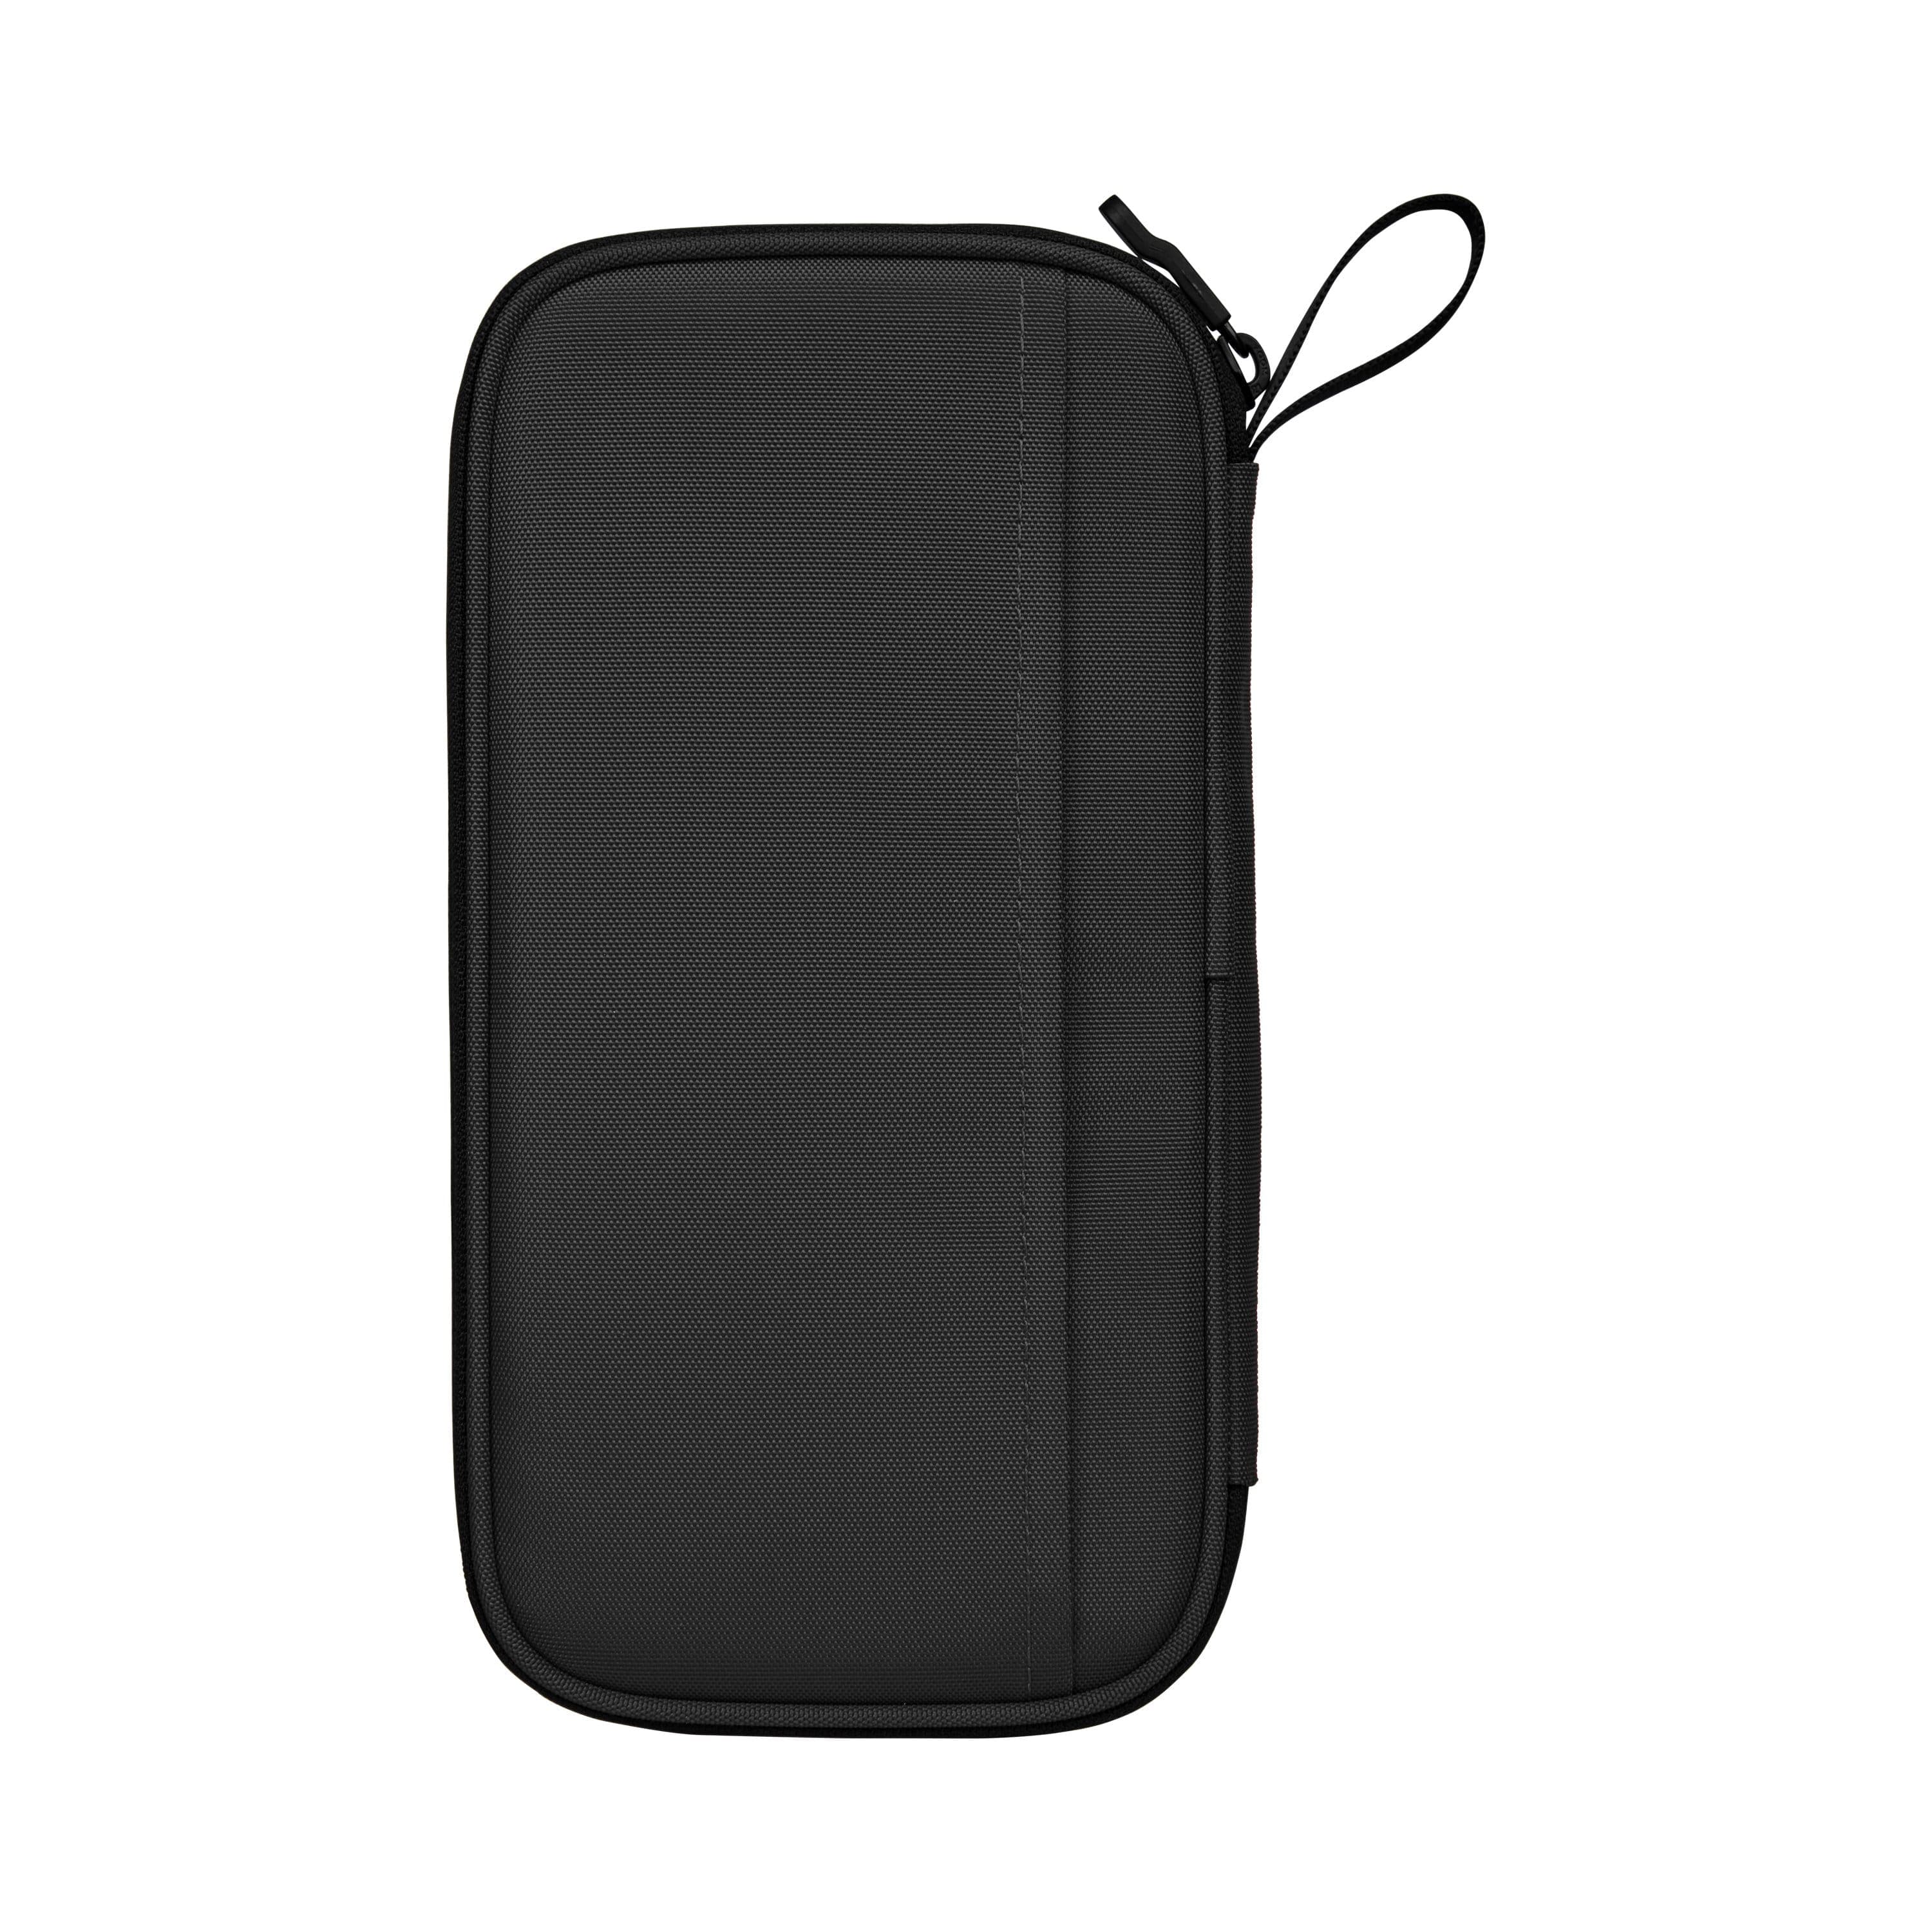 Victorinox Travel Accessories 5.0 Travel Organizer With RFID Black - 610597